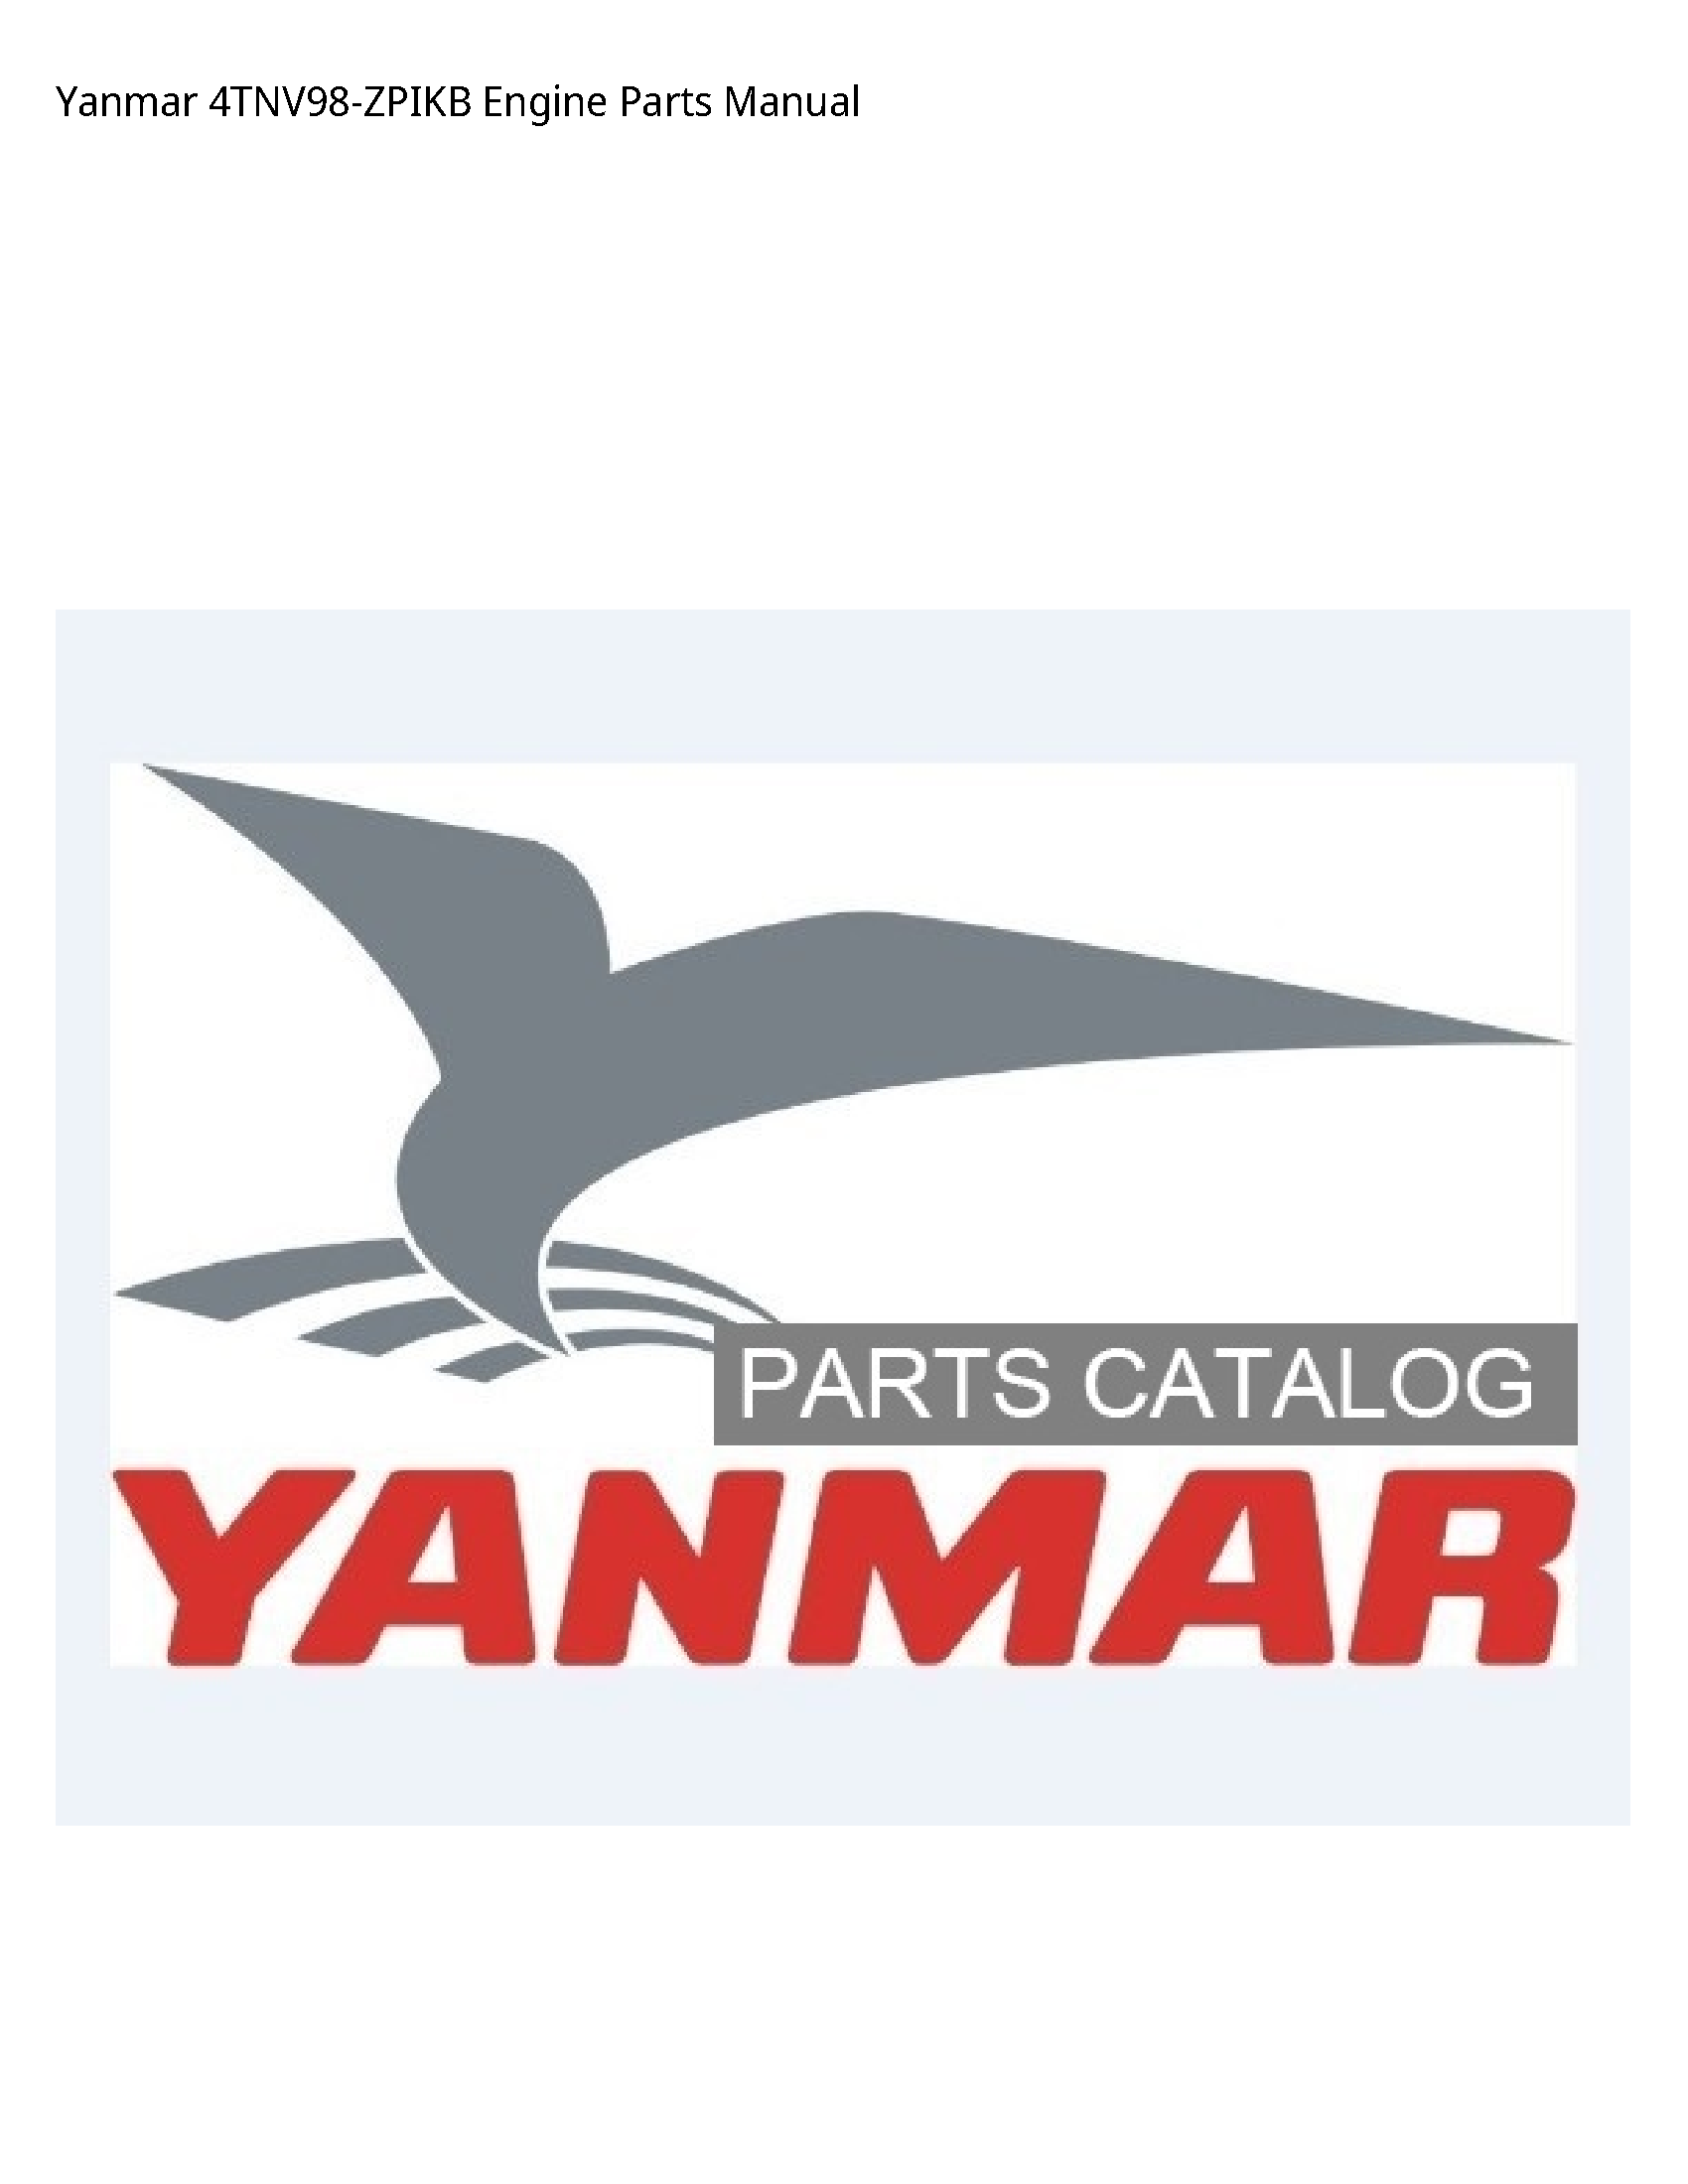 Yanmar 4TNV98-ZPIKB Engine Parts manual